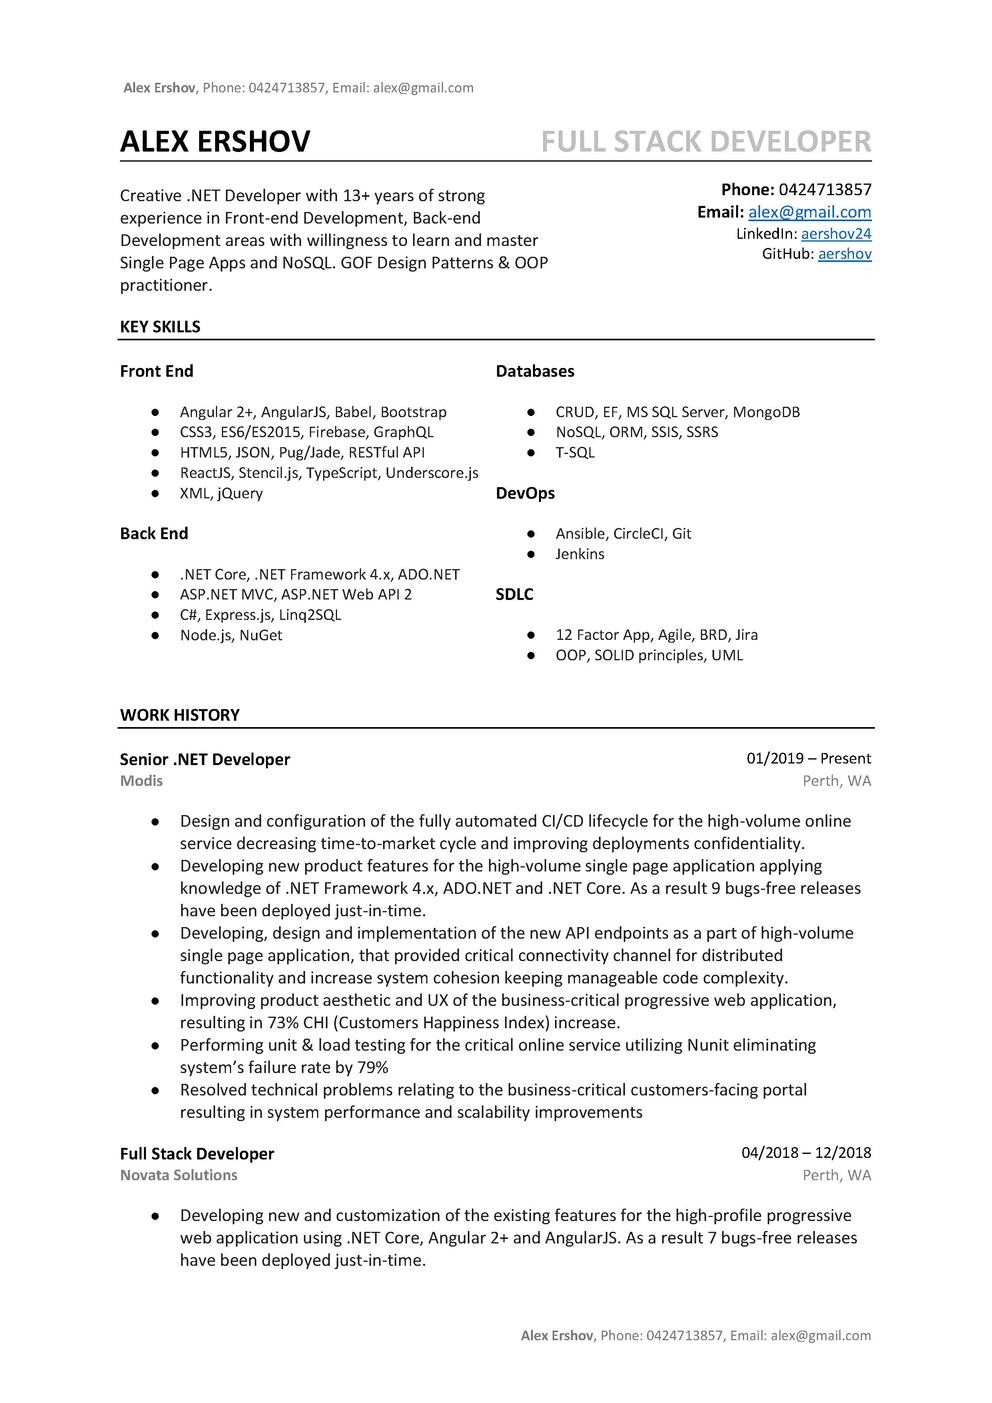 Sample Resume with Kafka and Rabbitmq Experience Github – Aershov24/101-developer-resume-cv-templates: the Only …